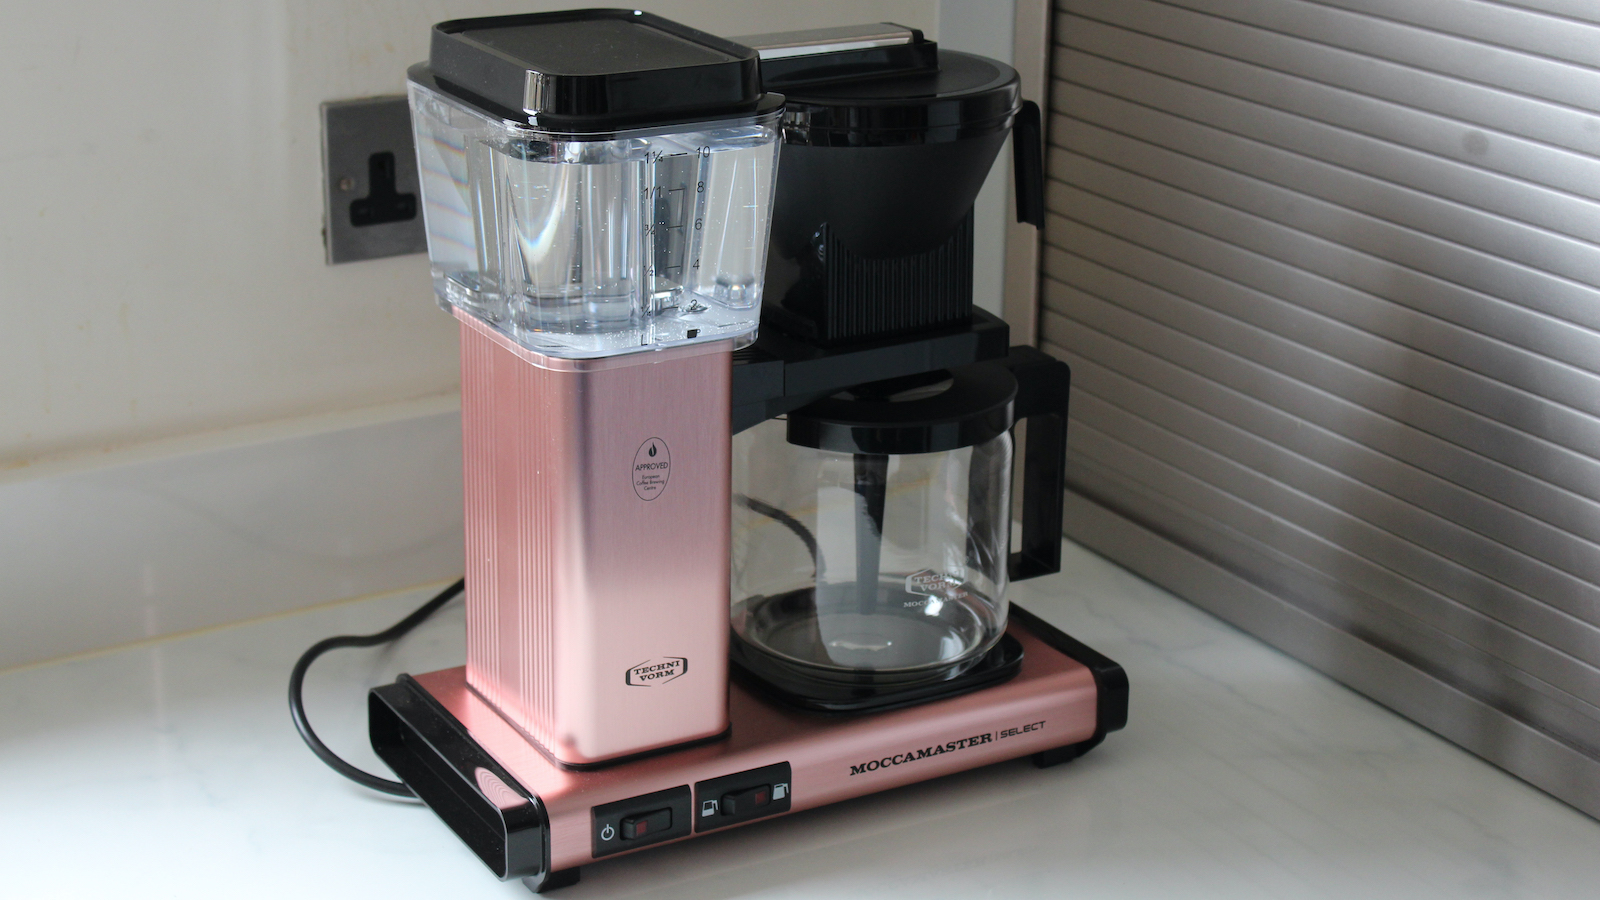  Moccamaster KBG/ KGBT Select filter coffee machine - Best filter coffee maker